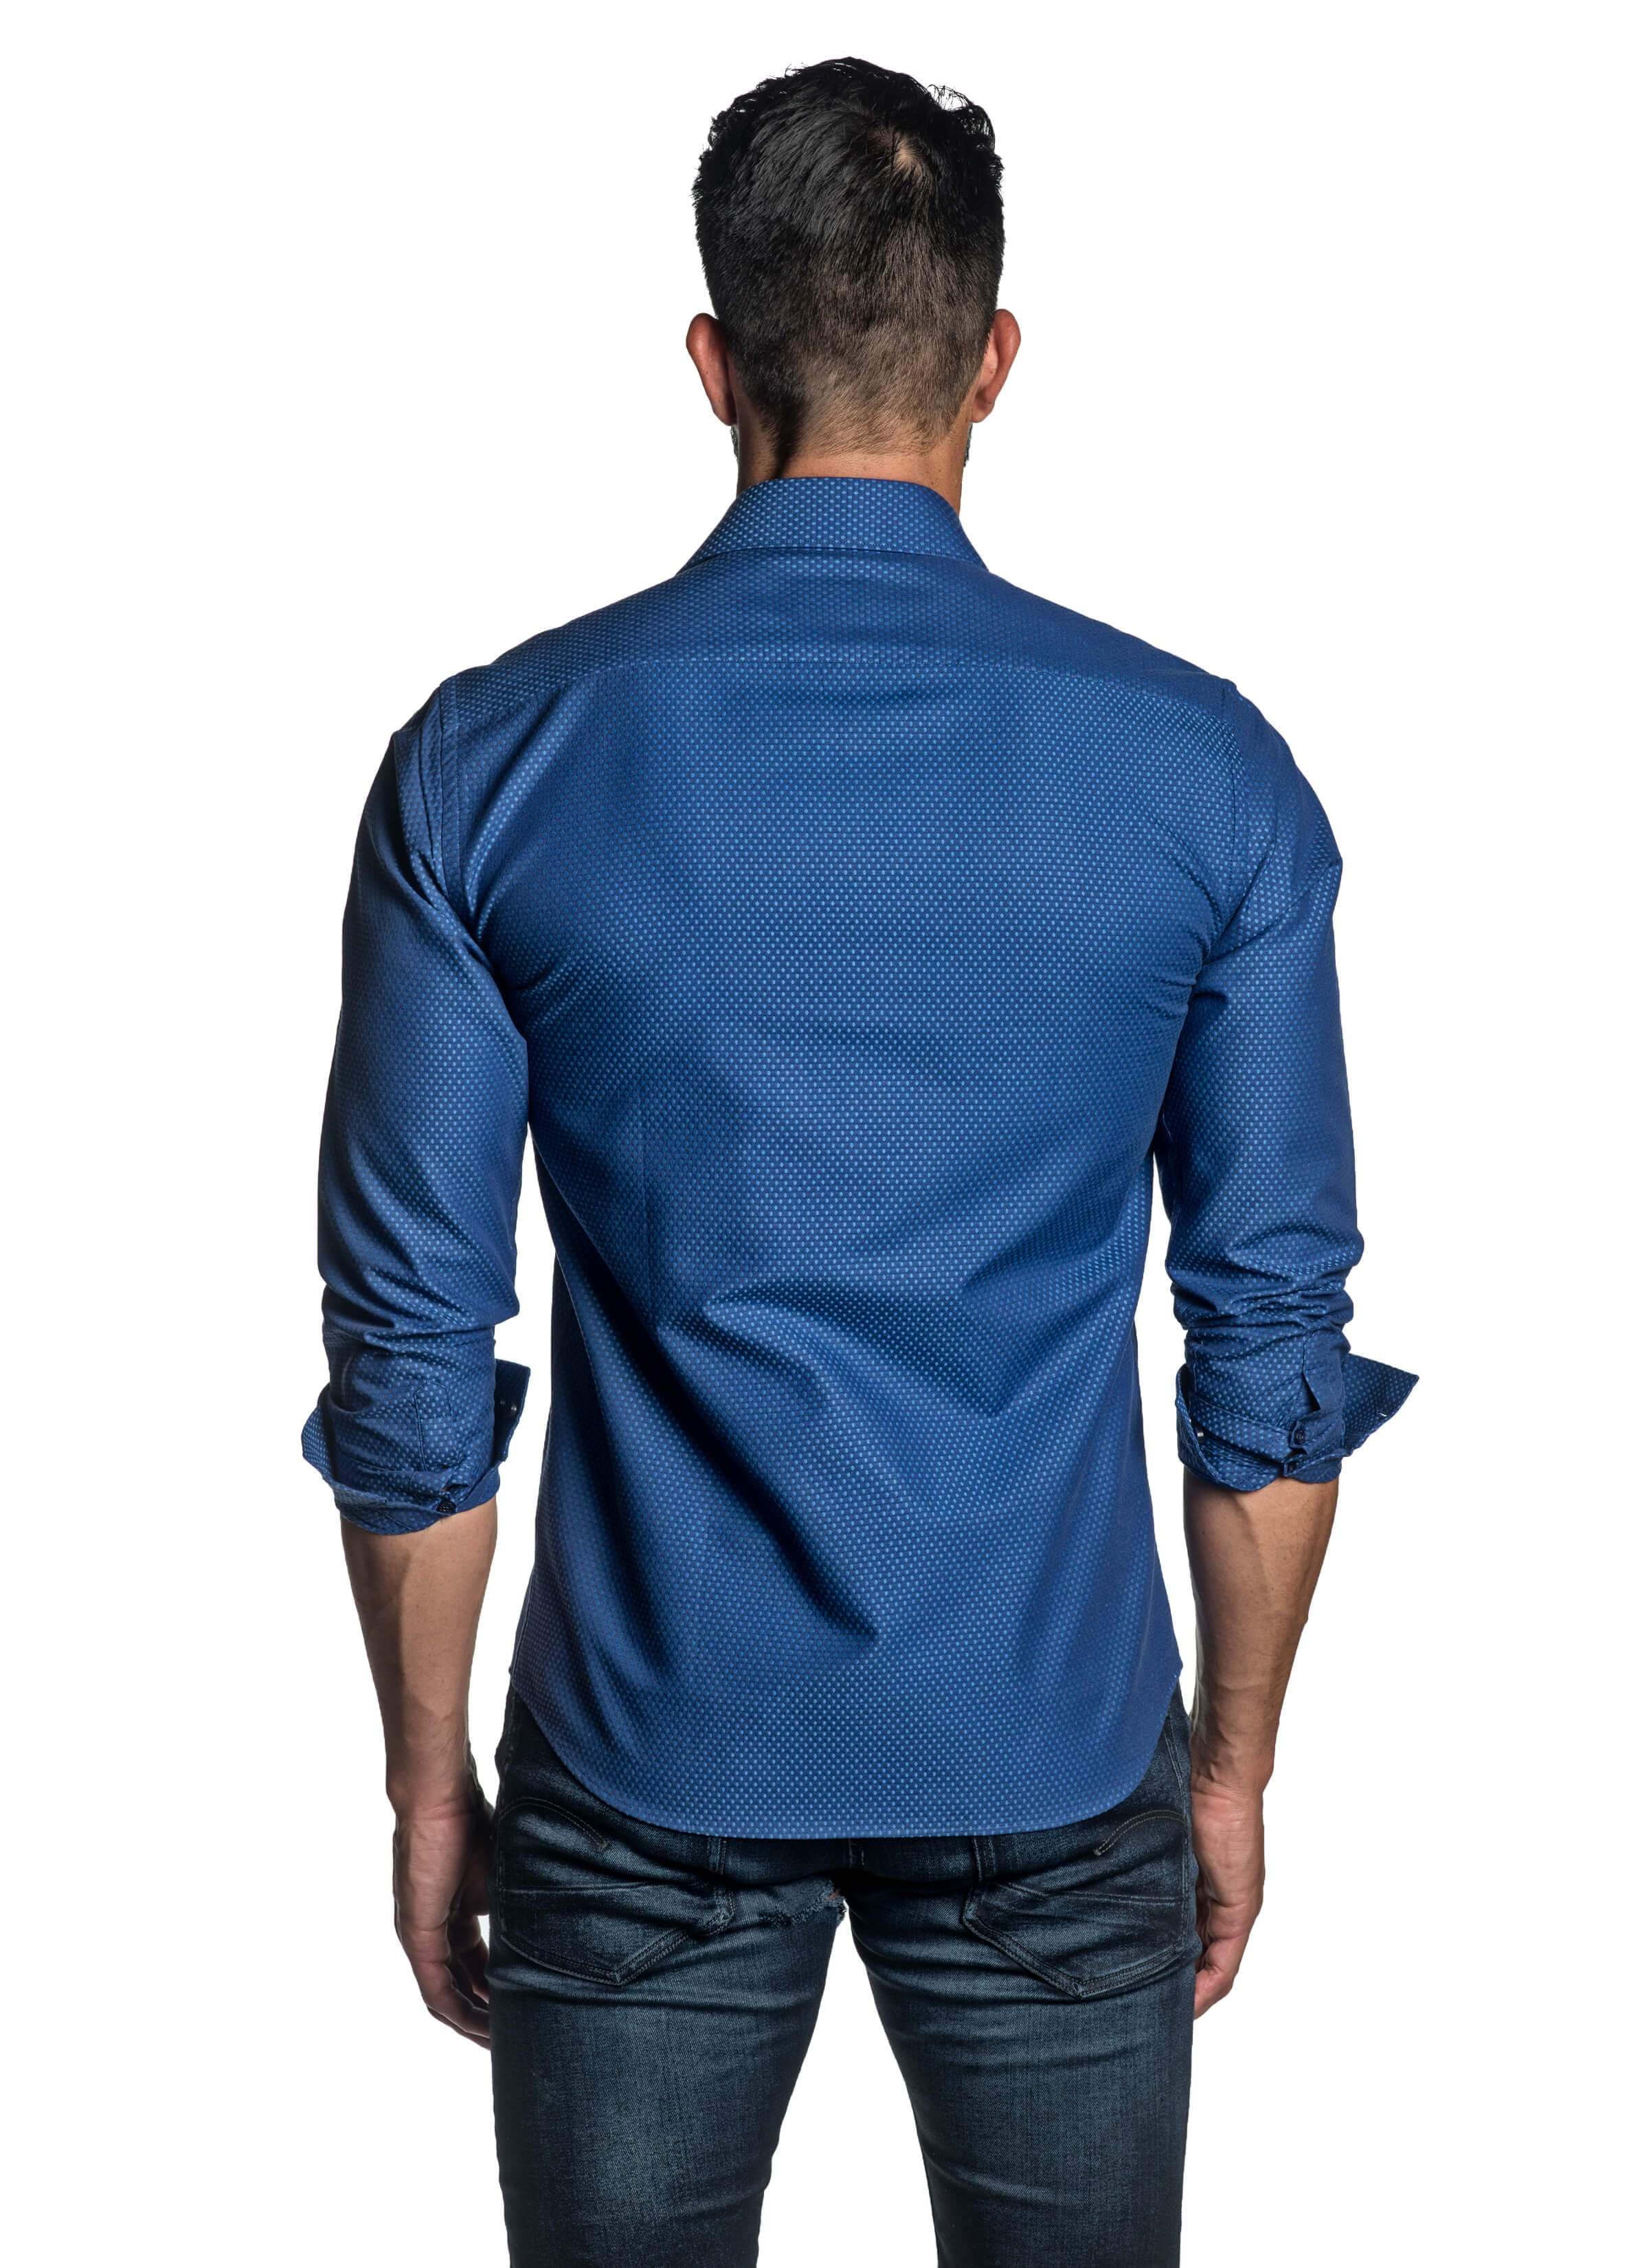 Blue Jacquard Shirt for Men T-2629